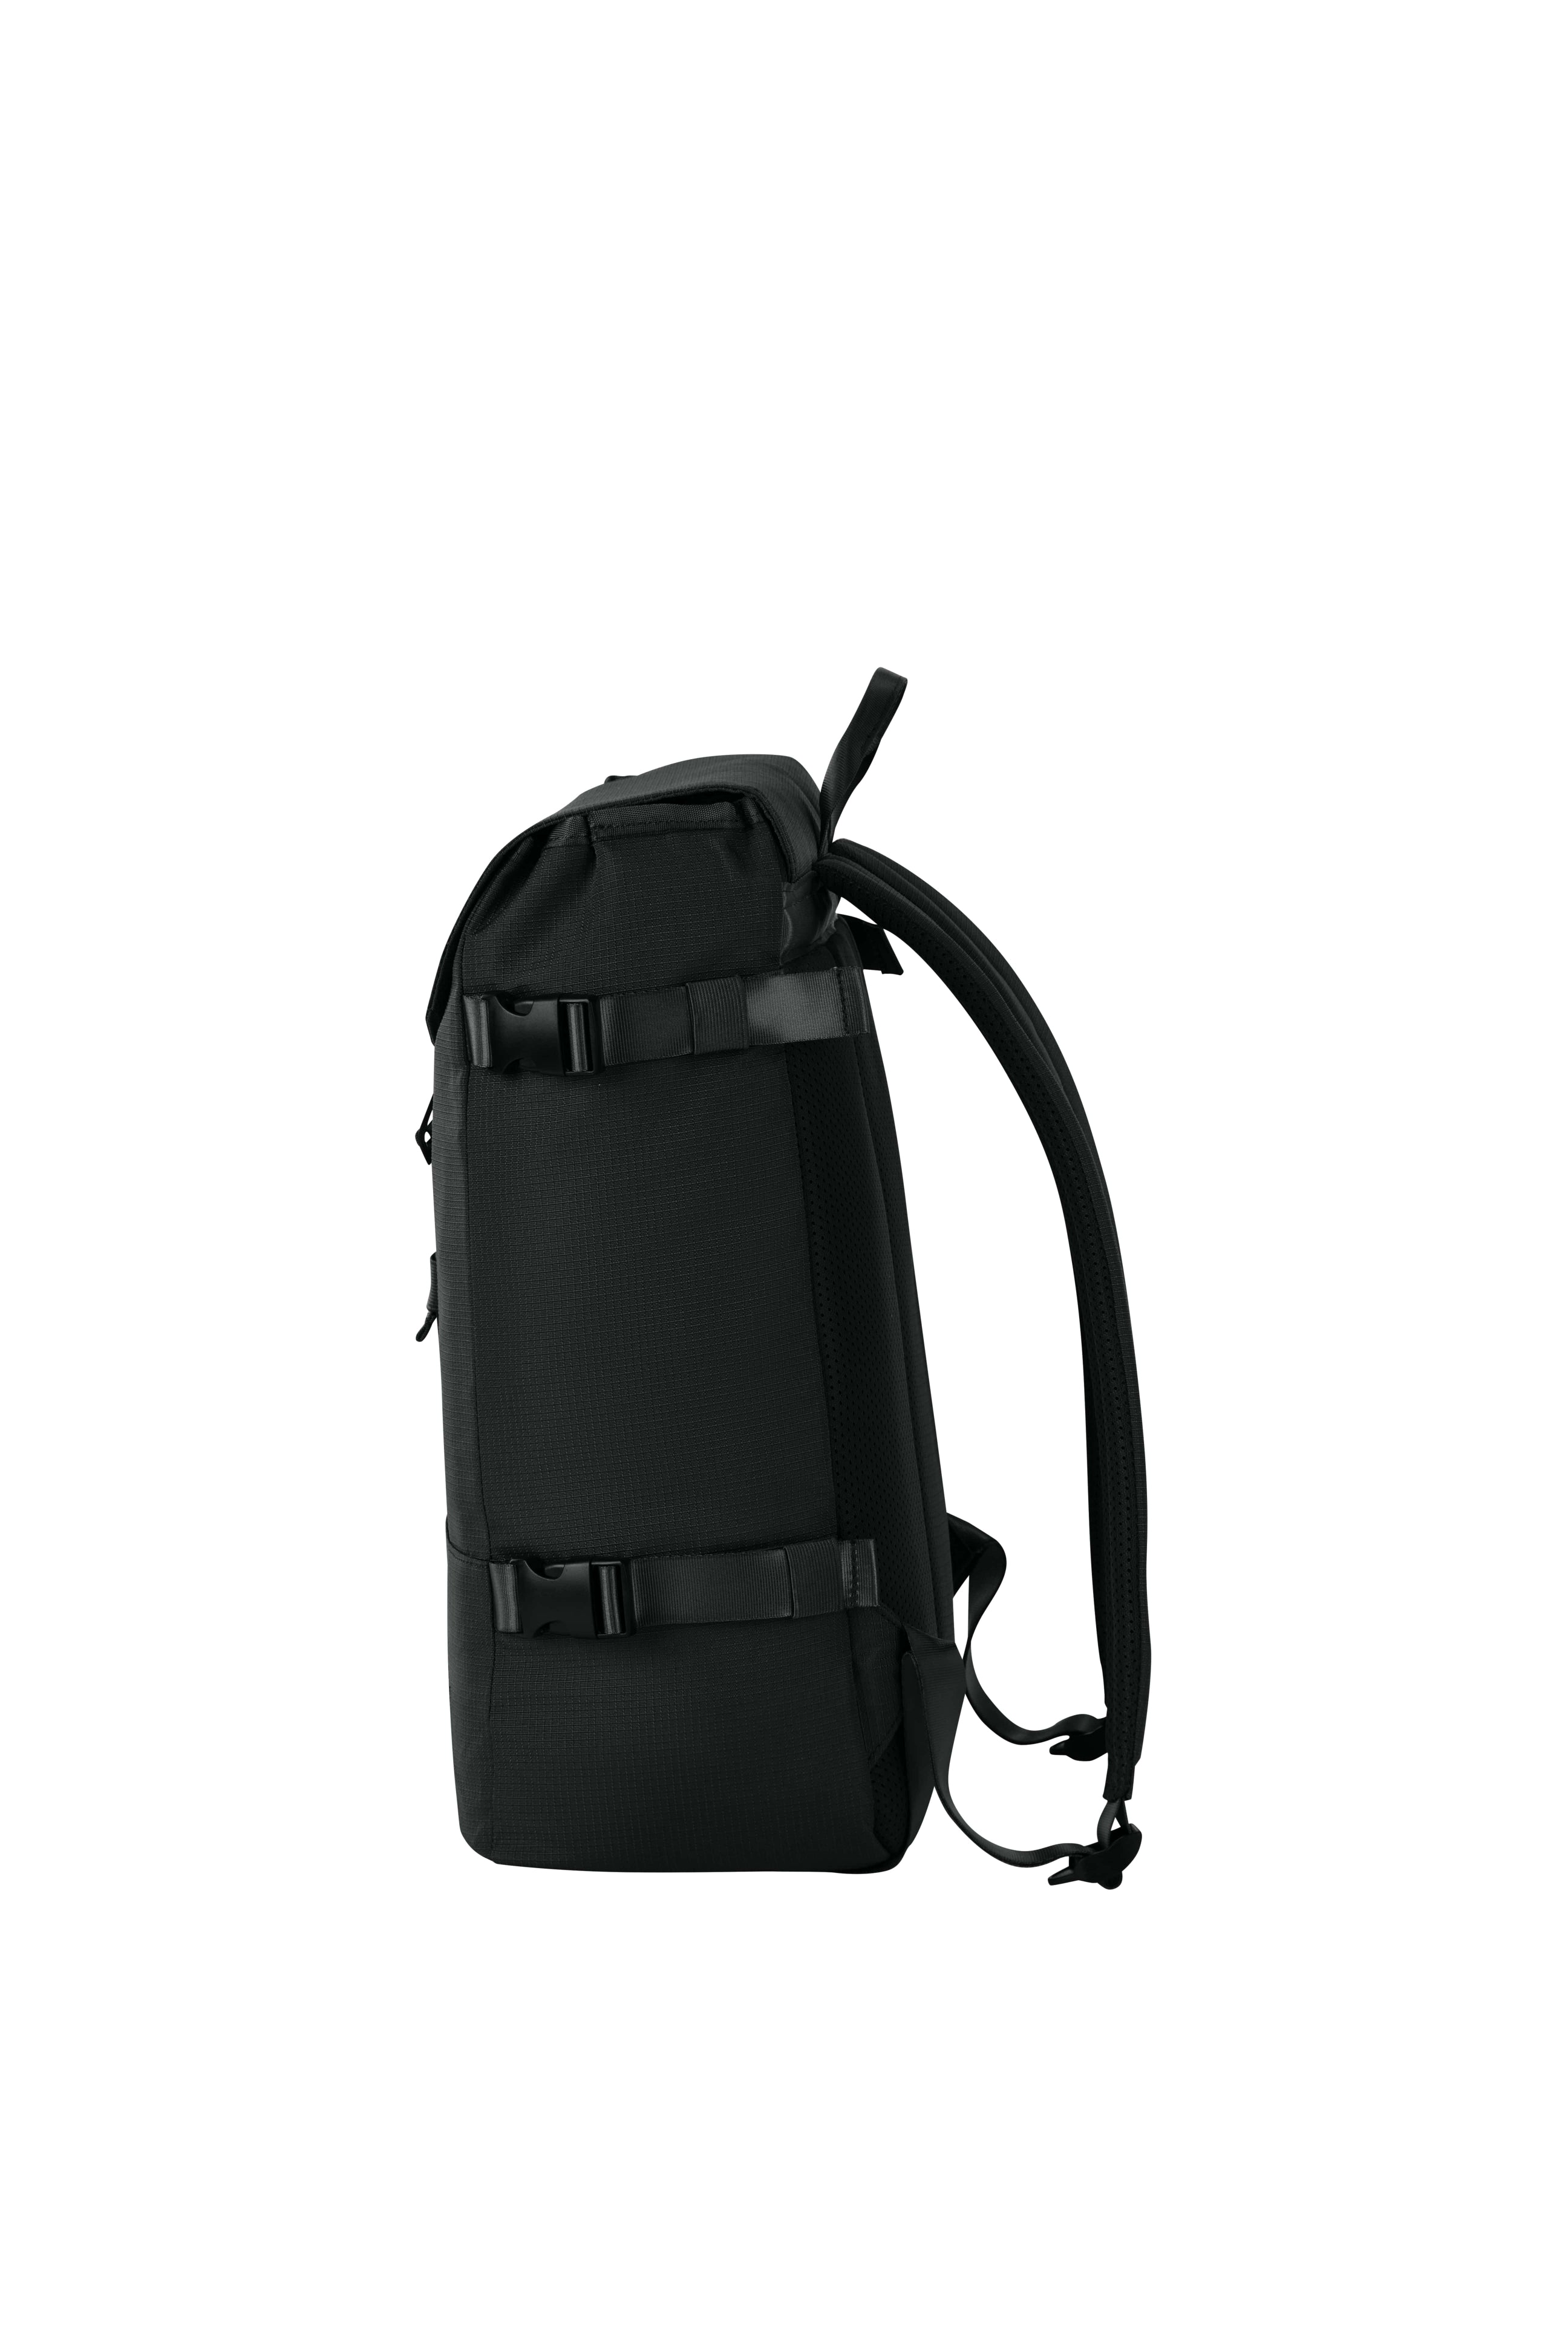 High Sierra - Camille 20L 15.6in Laptop backpack - Black-3